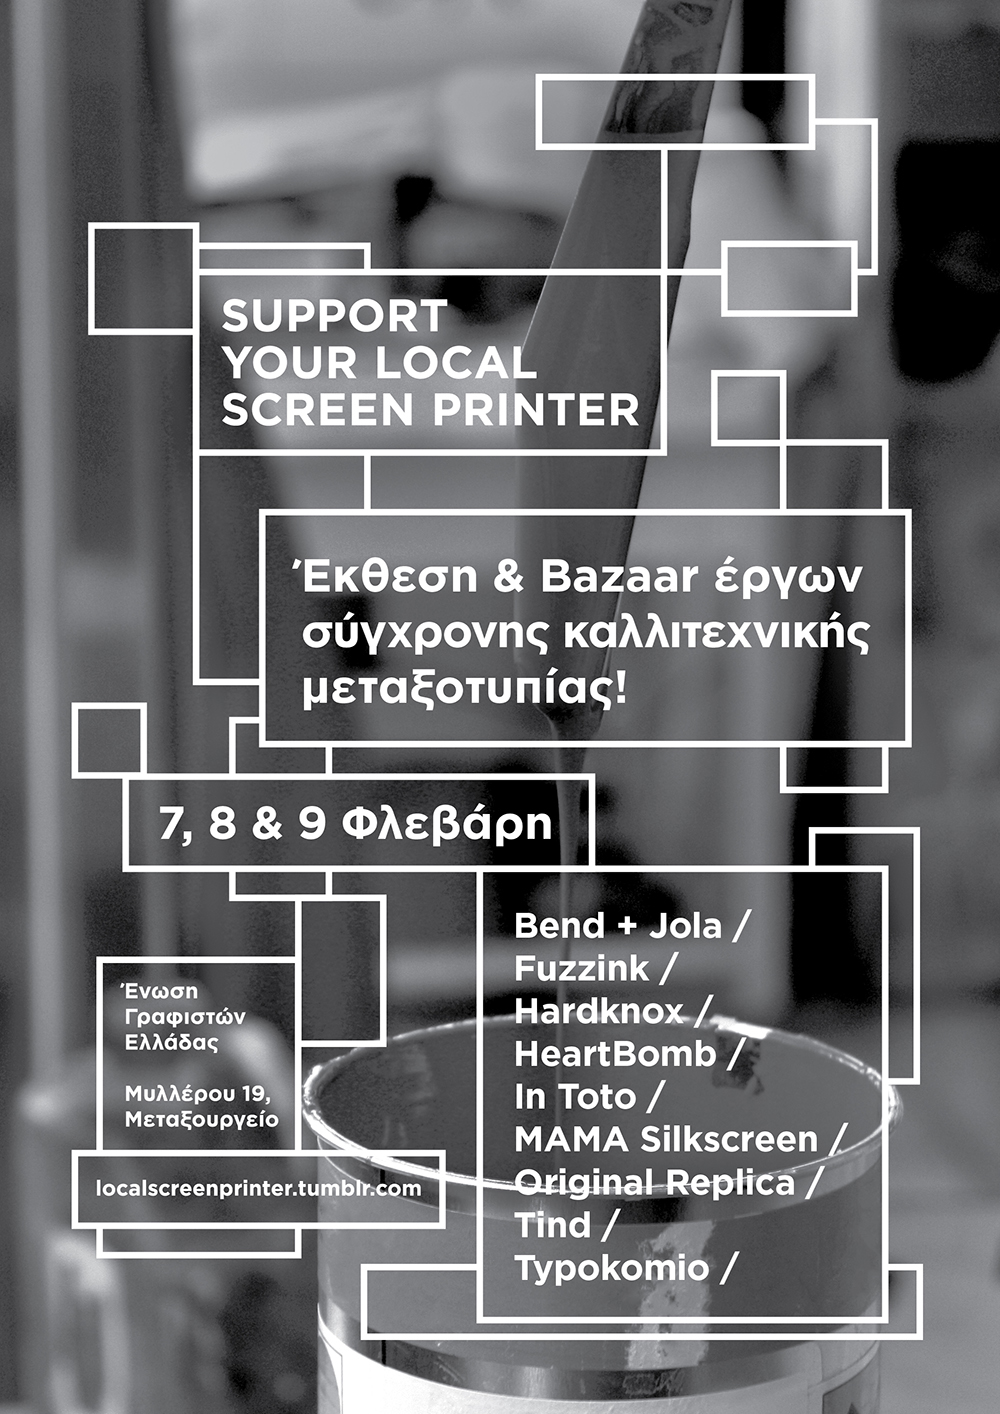 support screen printing silkscreen print printer local poster Exhibition  Mama fuzzink tind intoto heartbomb Original replica